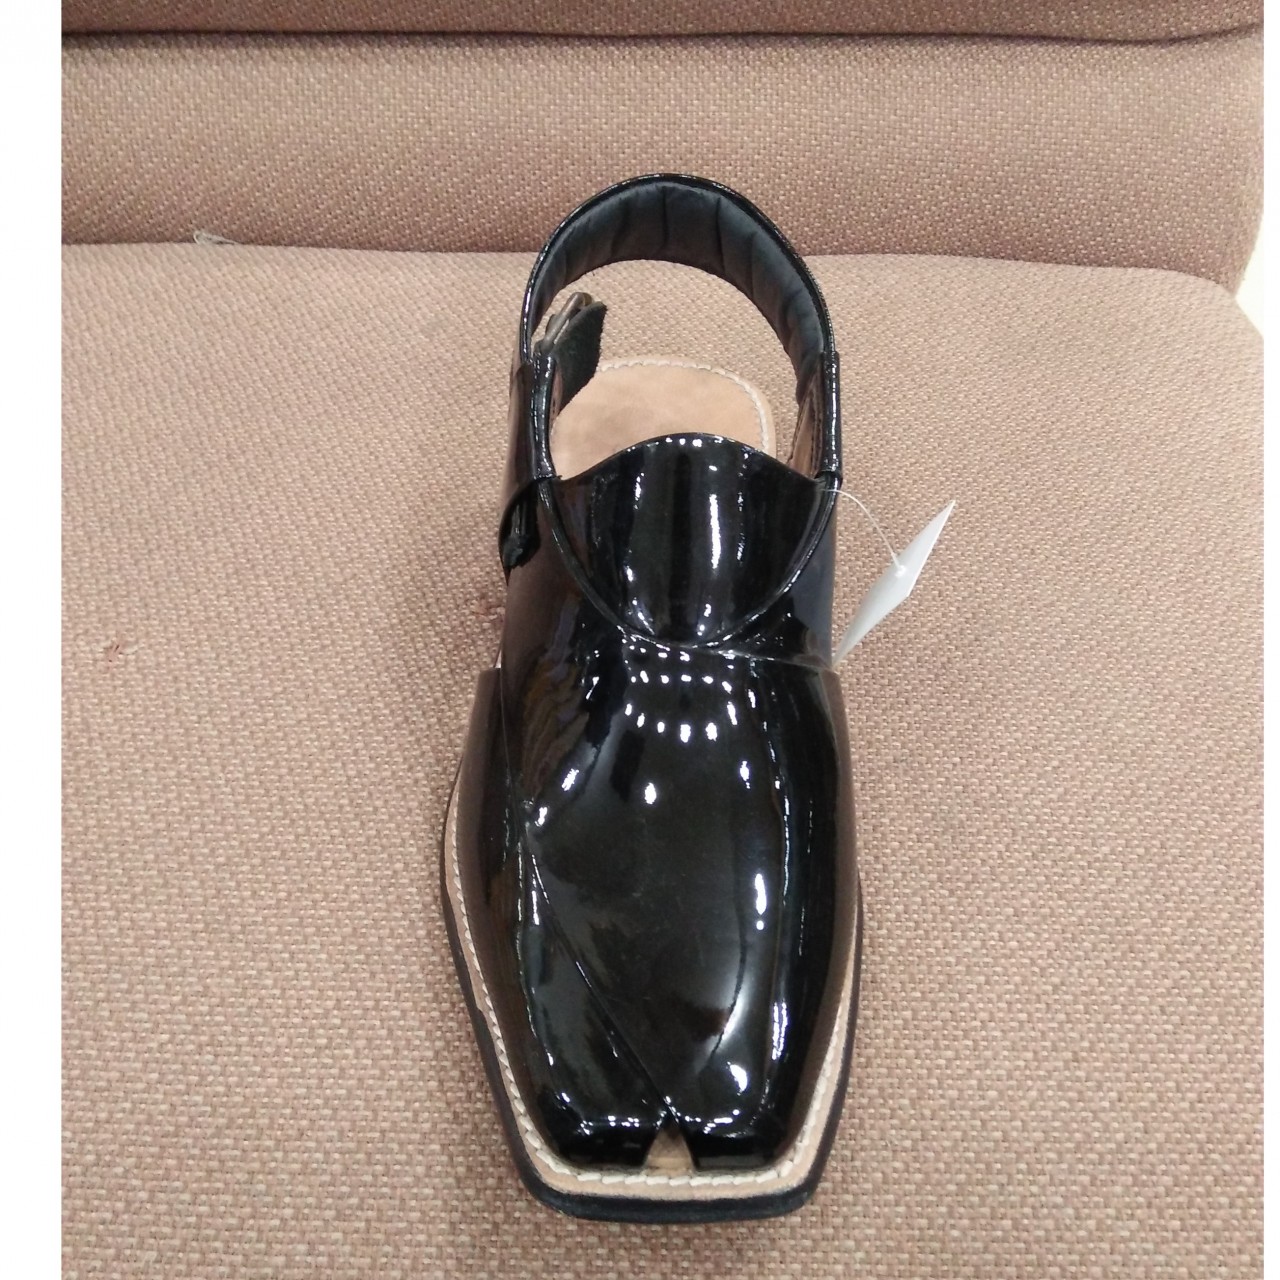 MilliShoes All Leather Black Shine Peshawari Chappal For Men -6 to 11